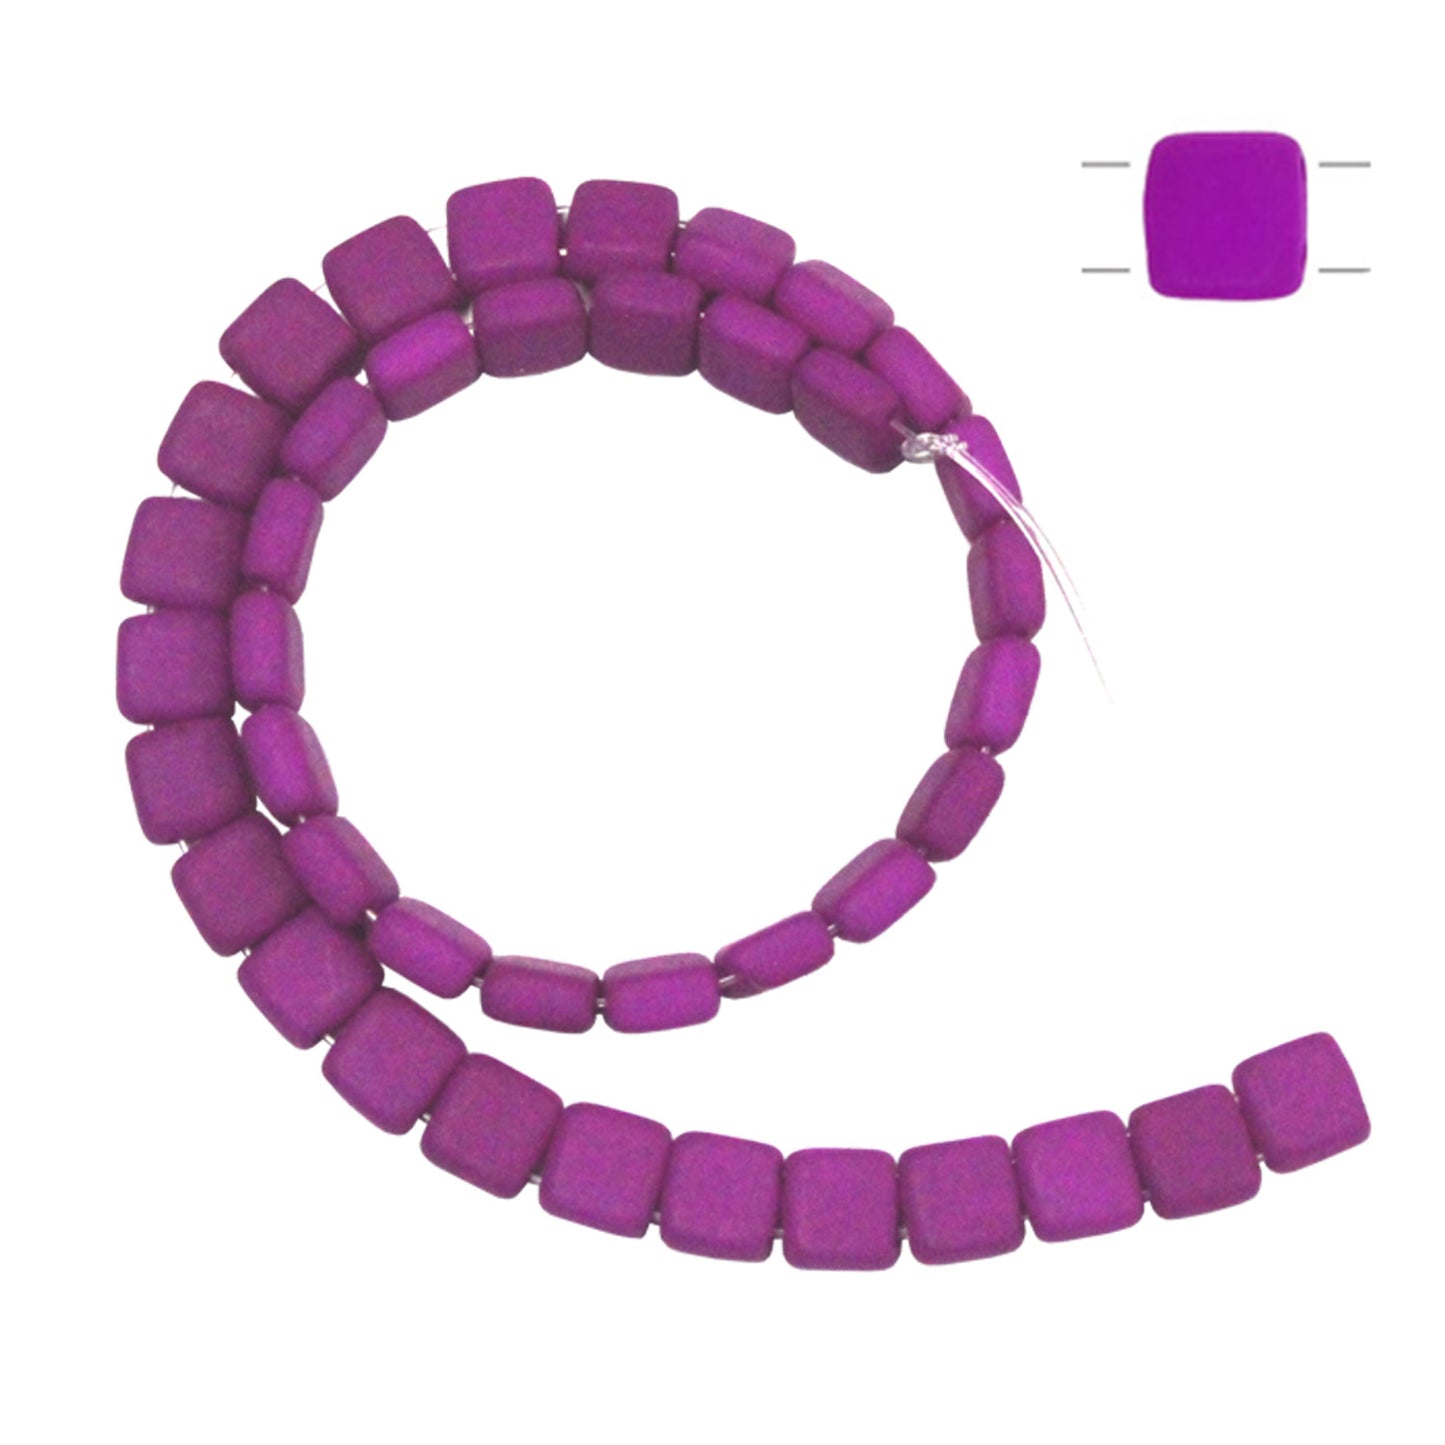 6mm Neon Purple / 2 Hole CzechMates Tile Beads / 50 Bead Strand